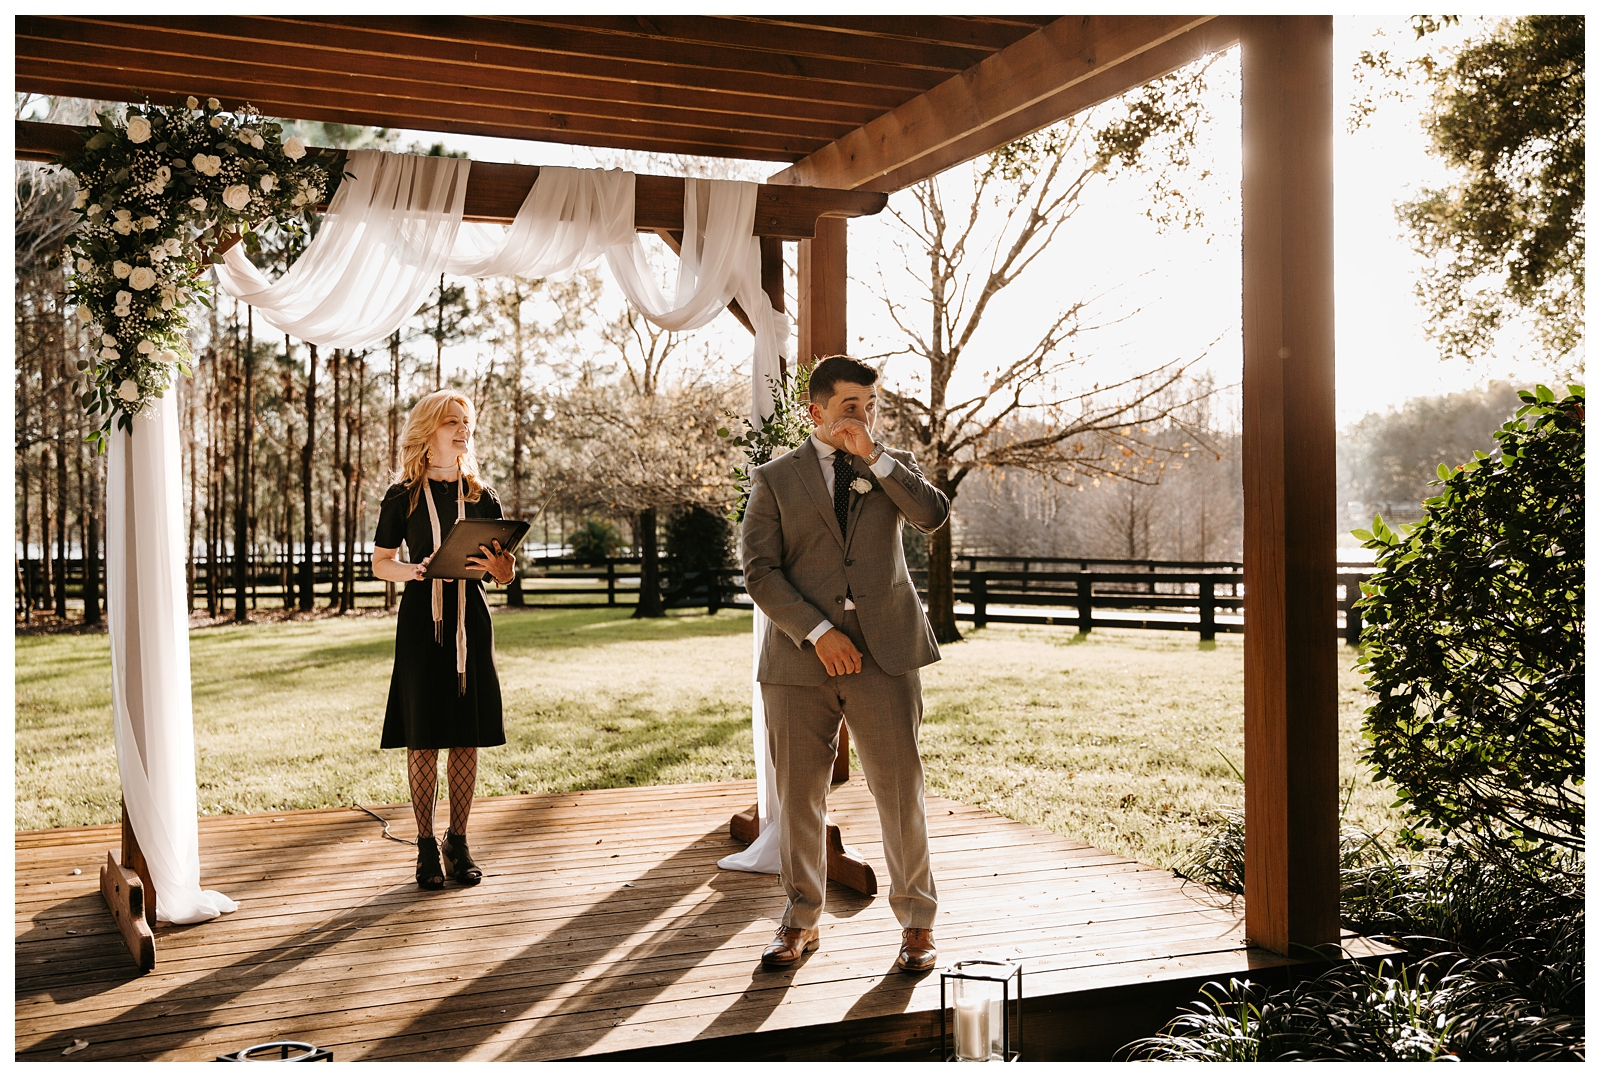 Outdoor wedding ceremony at Club Lake Plantation